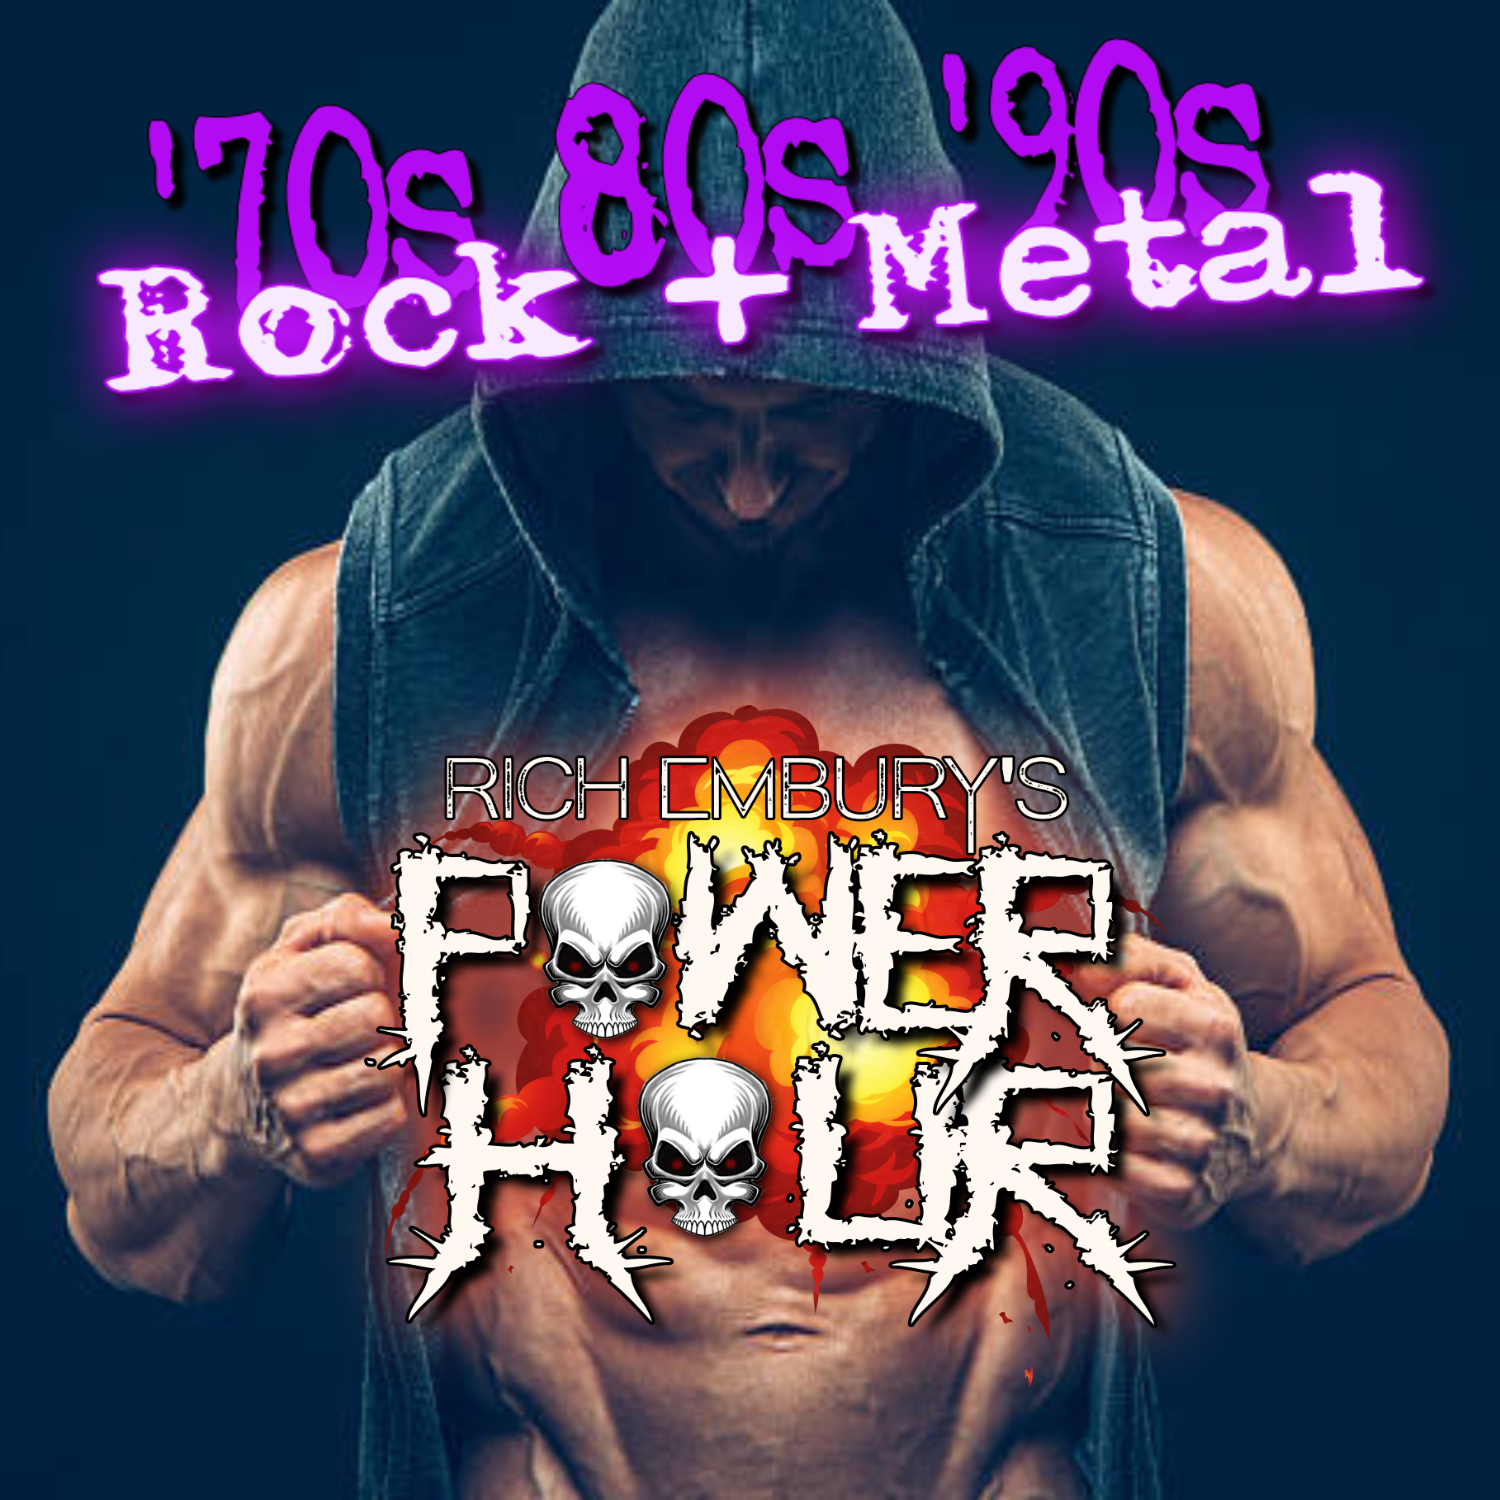 Rich Embury’s Power Hour // David Bowie, Guns N’ Roses, Jimi Hendrix & more! post thumbnail image